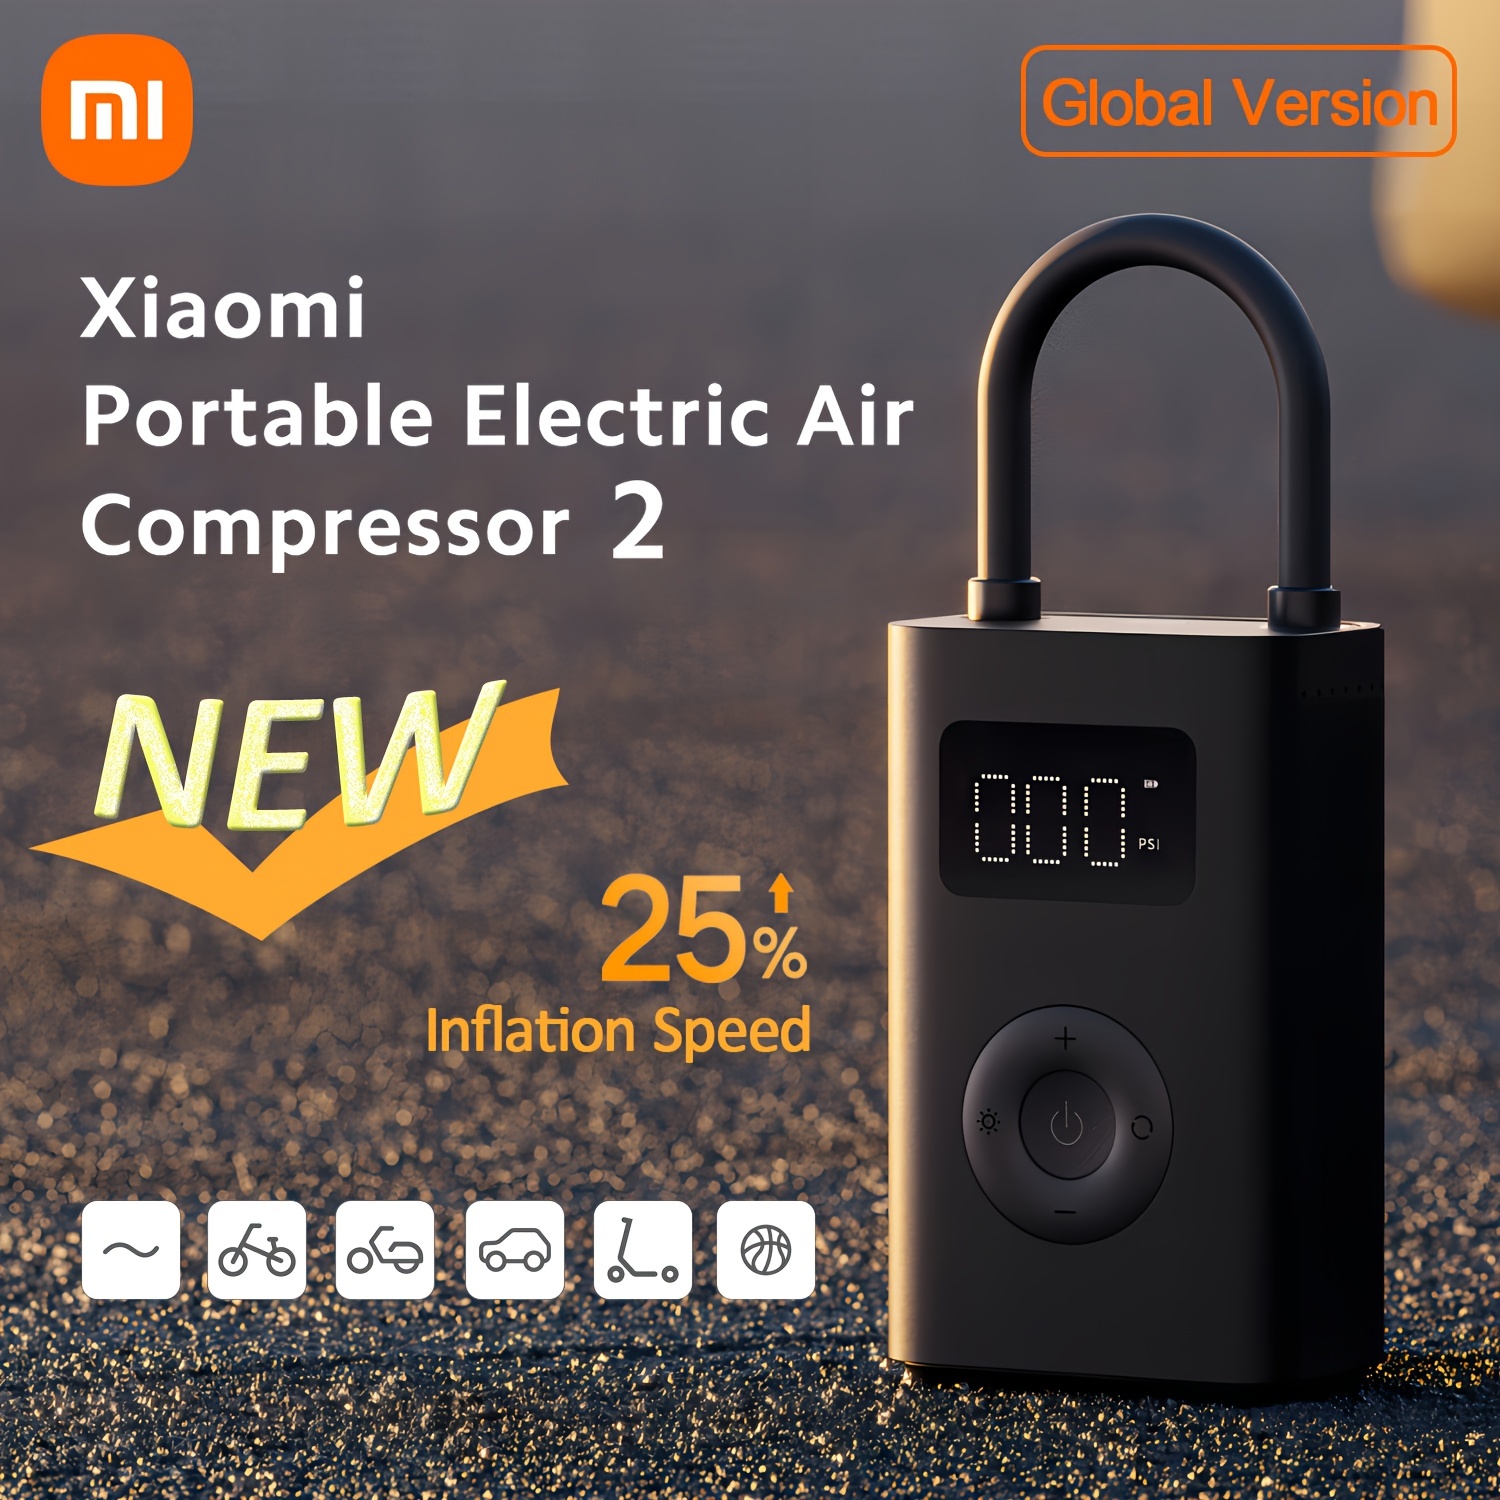 Compresor Xiaomi 1S - Mi Portable Electric Air Compressor 1S